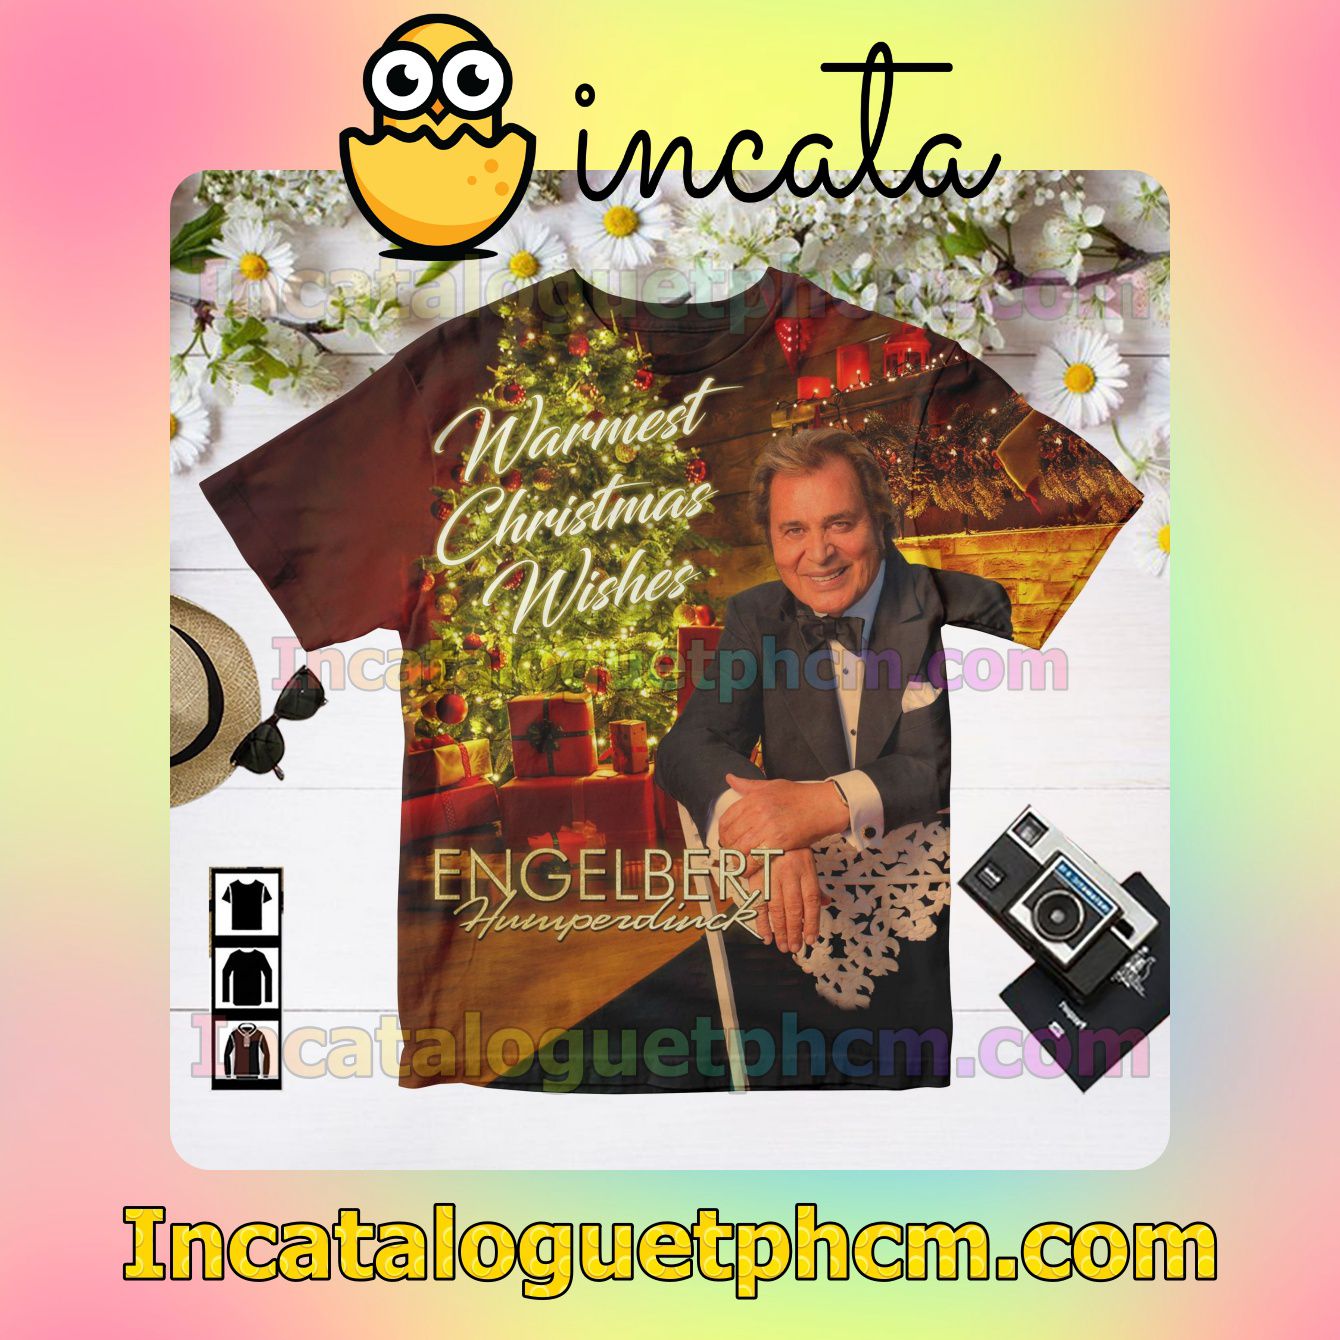 Engelbert Humperdinck Warmest Christmas Wishes Album Cover Gift Shirt